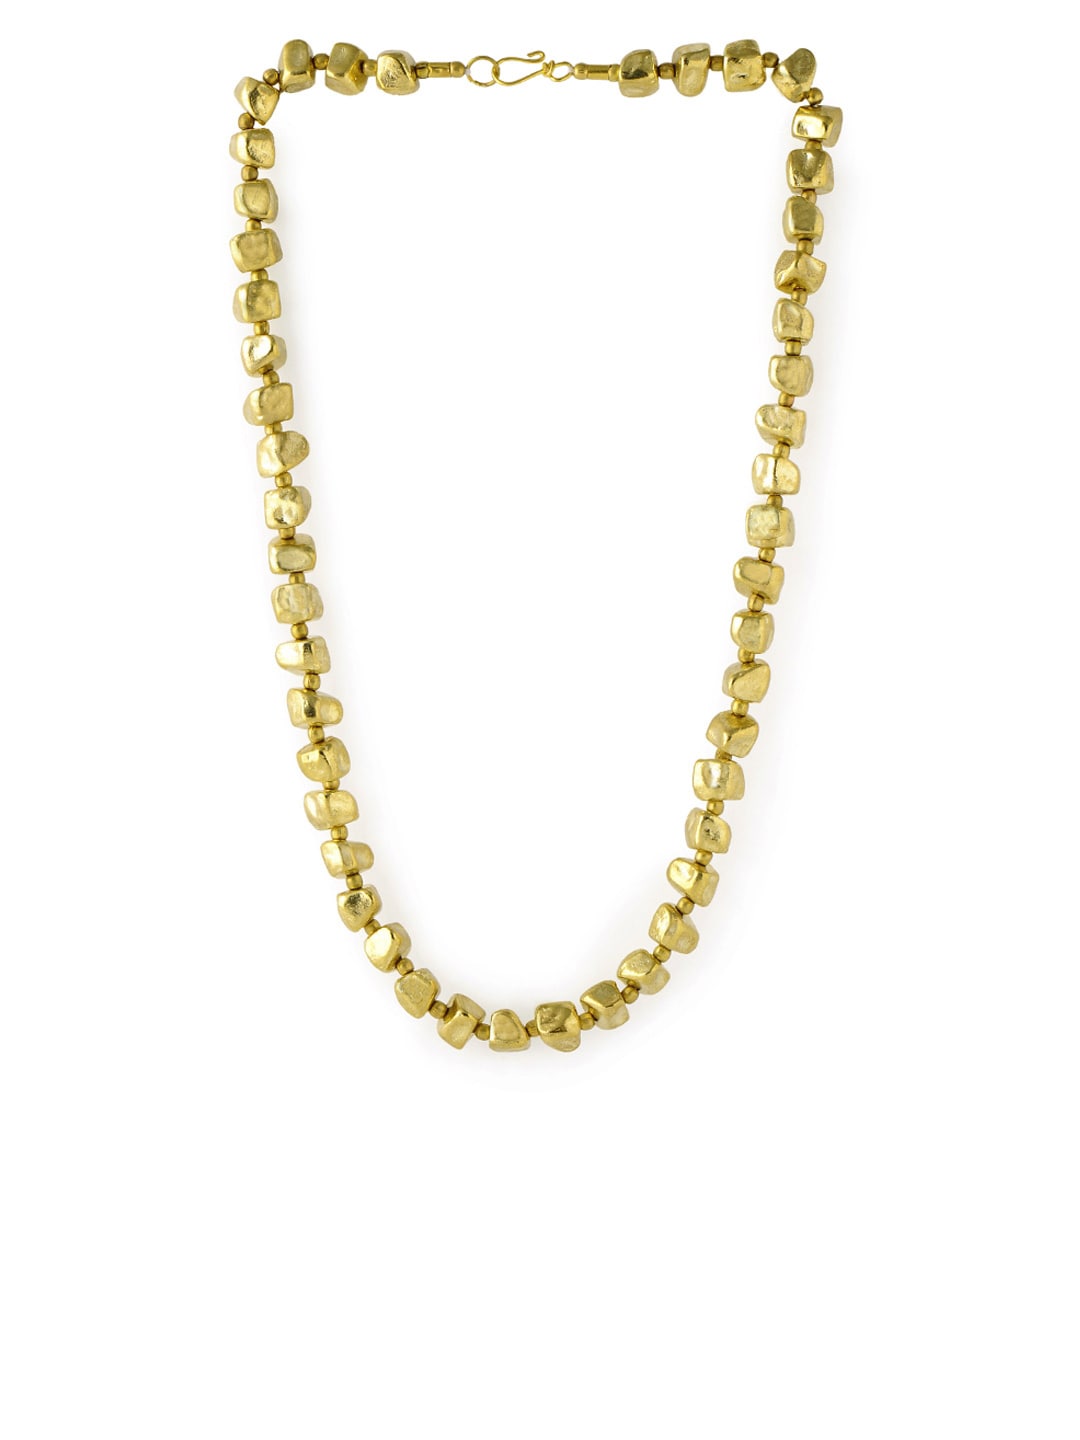 Pitaraa Golden Nugget Long Necklace